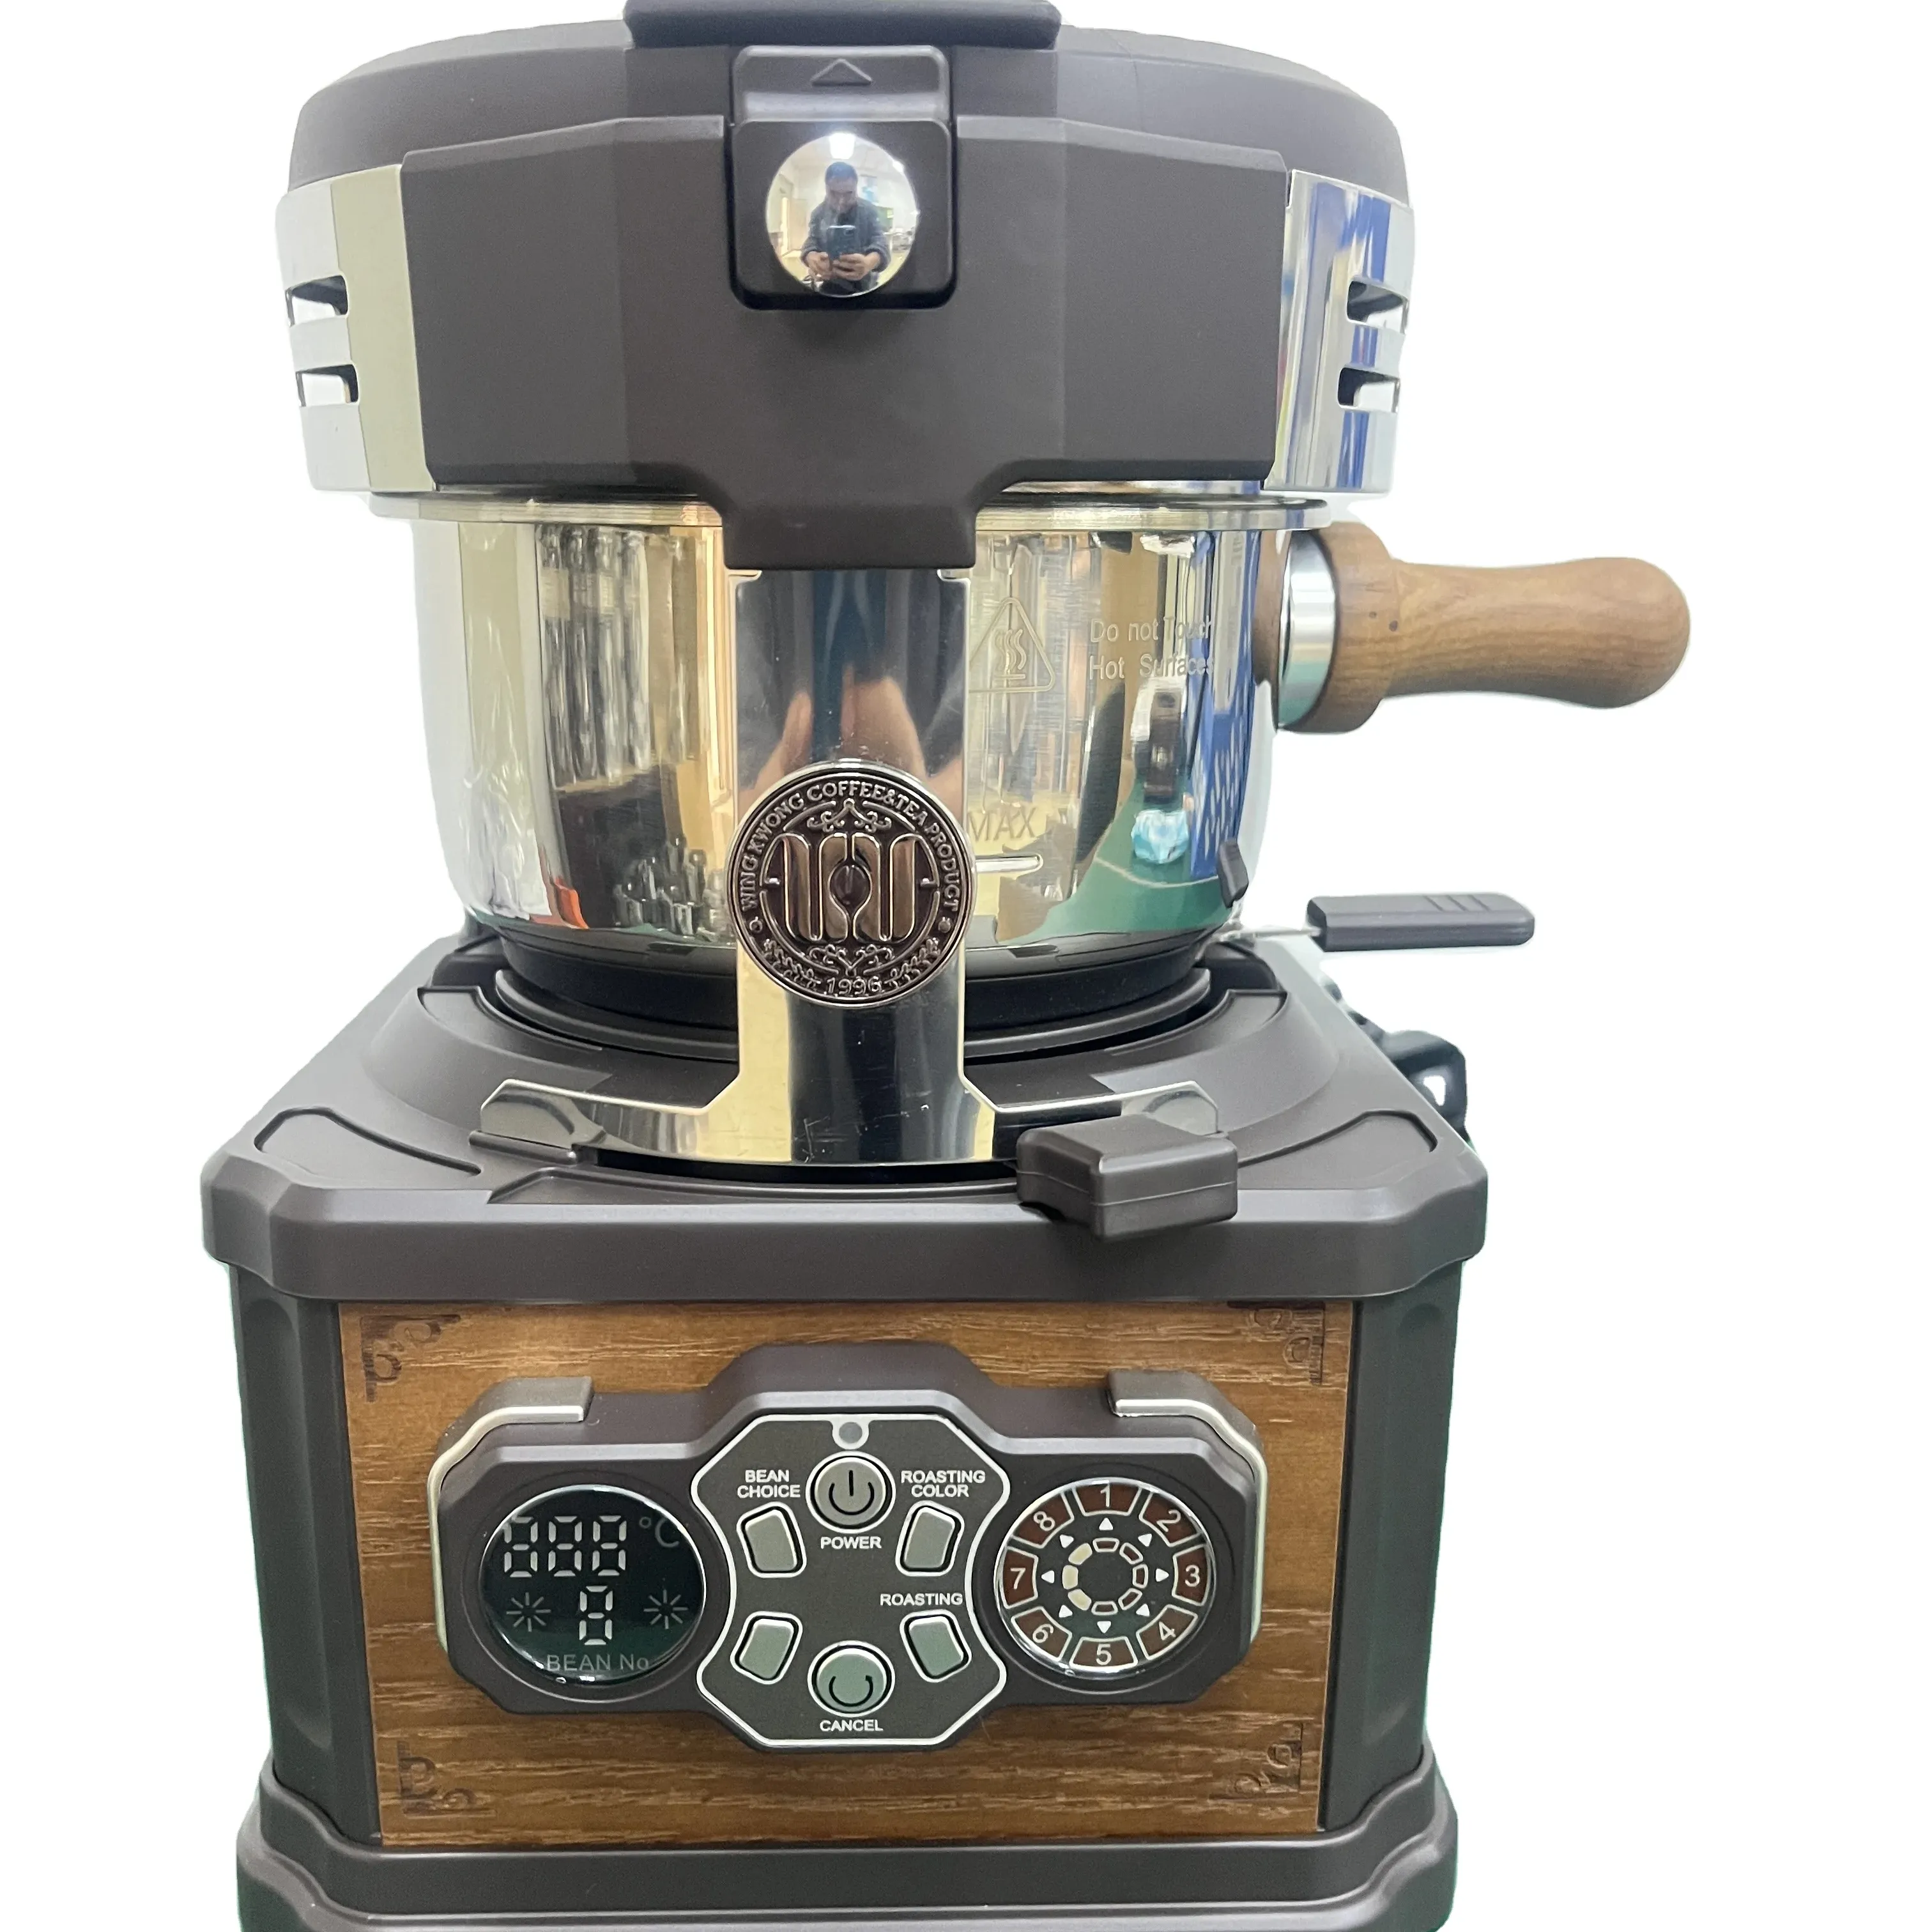 Tostador de granos de cacao caliente y rentable profesional 150g pequeño tostador de café automático, máquina para hornear granos de cacao